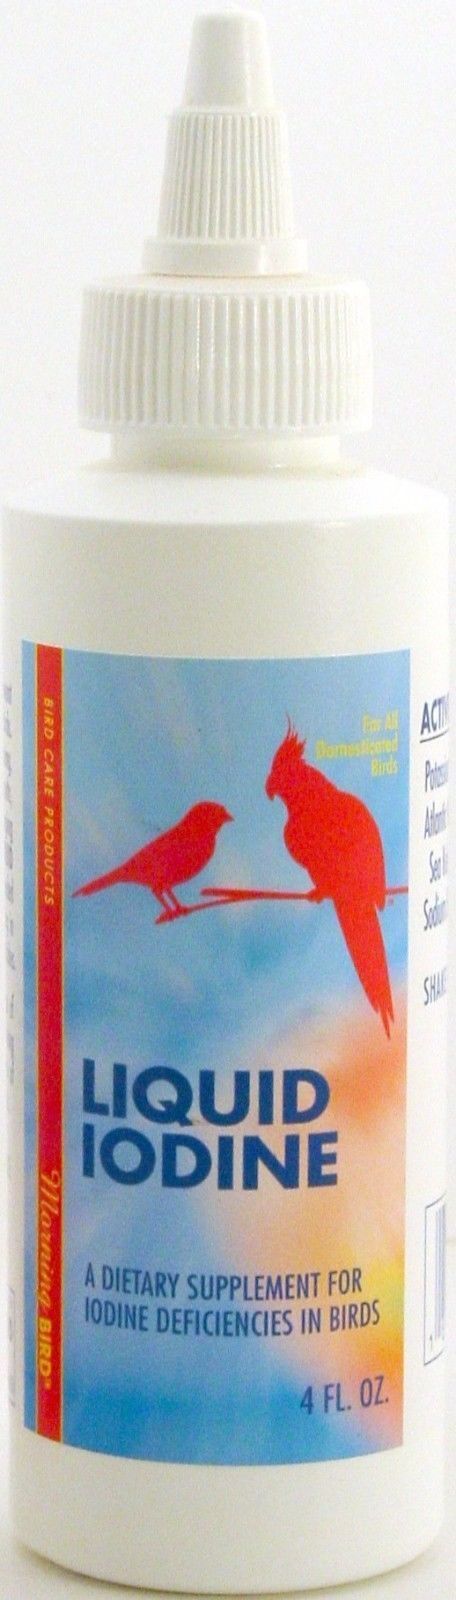 Liquid Iodine - Dietary Supplement for Iodine Deficiencies in Birds (2 OZ)